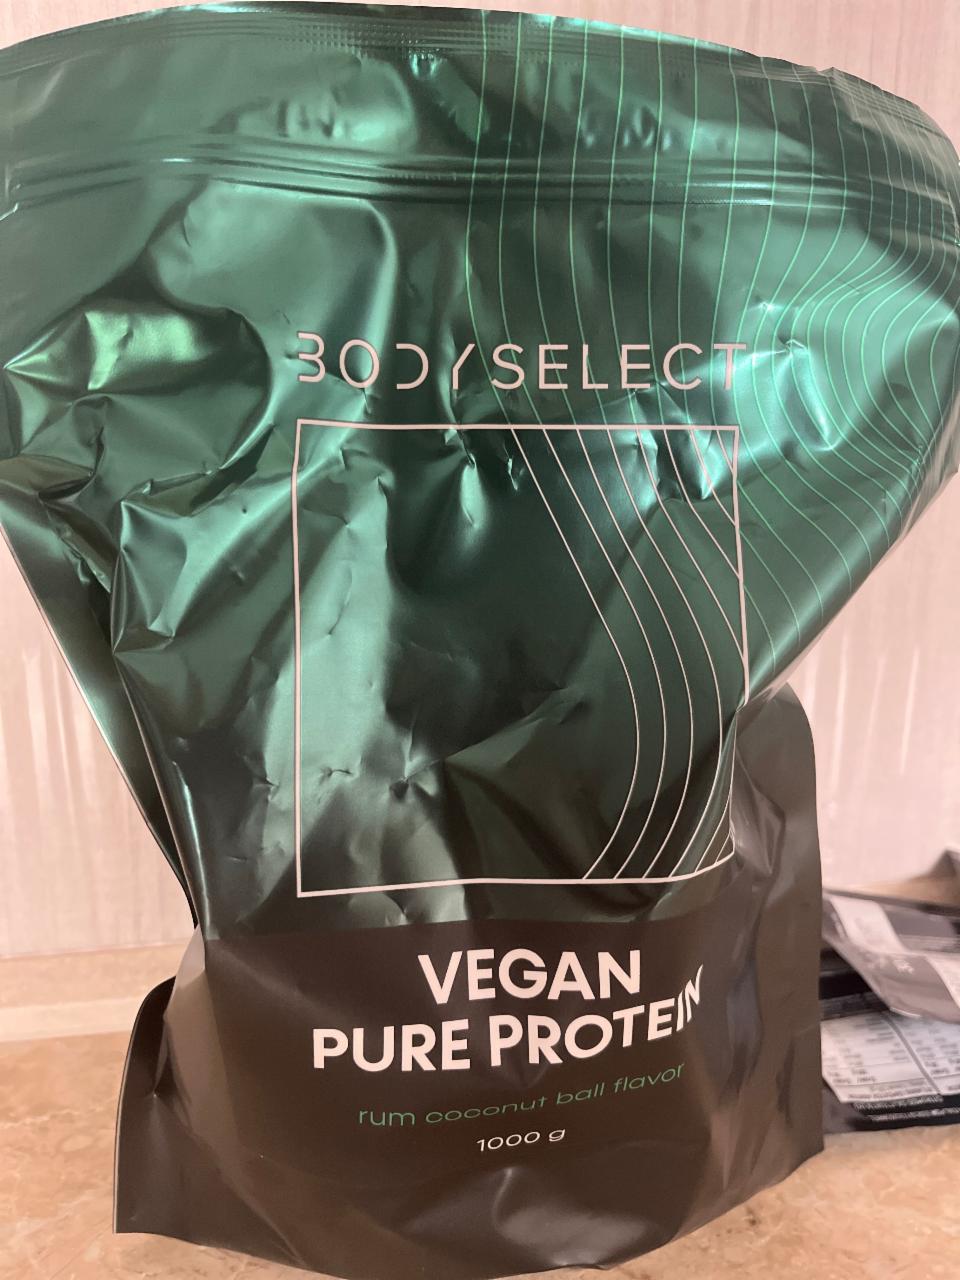 Képek - Vegan protein rum coconut ball flavour Body select